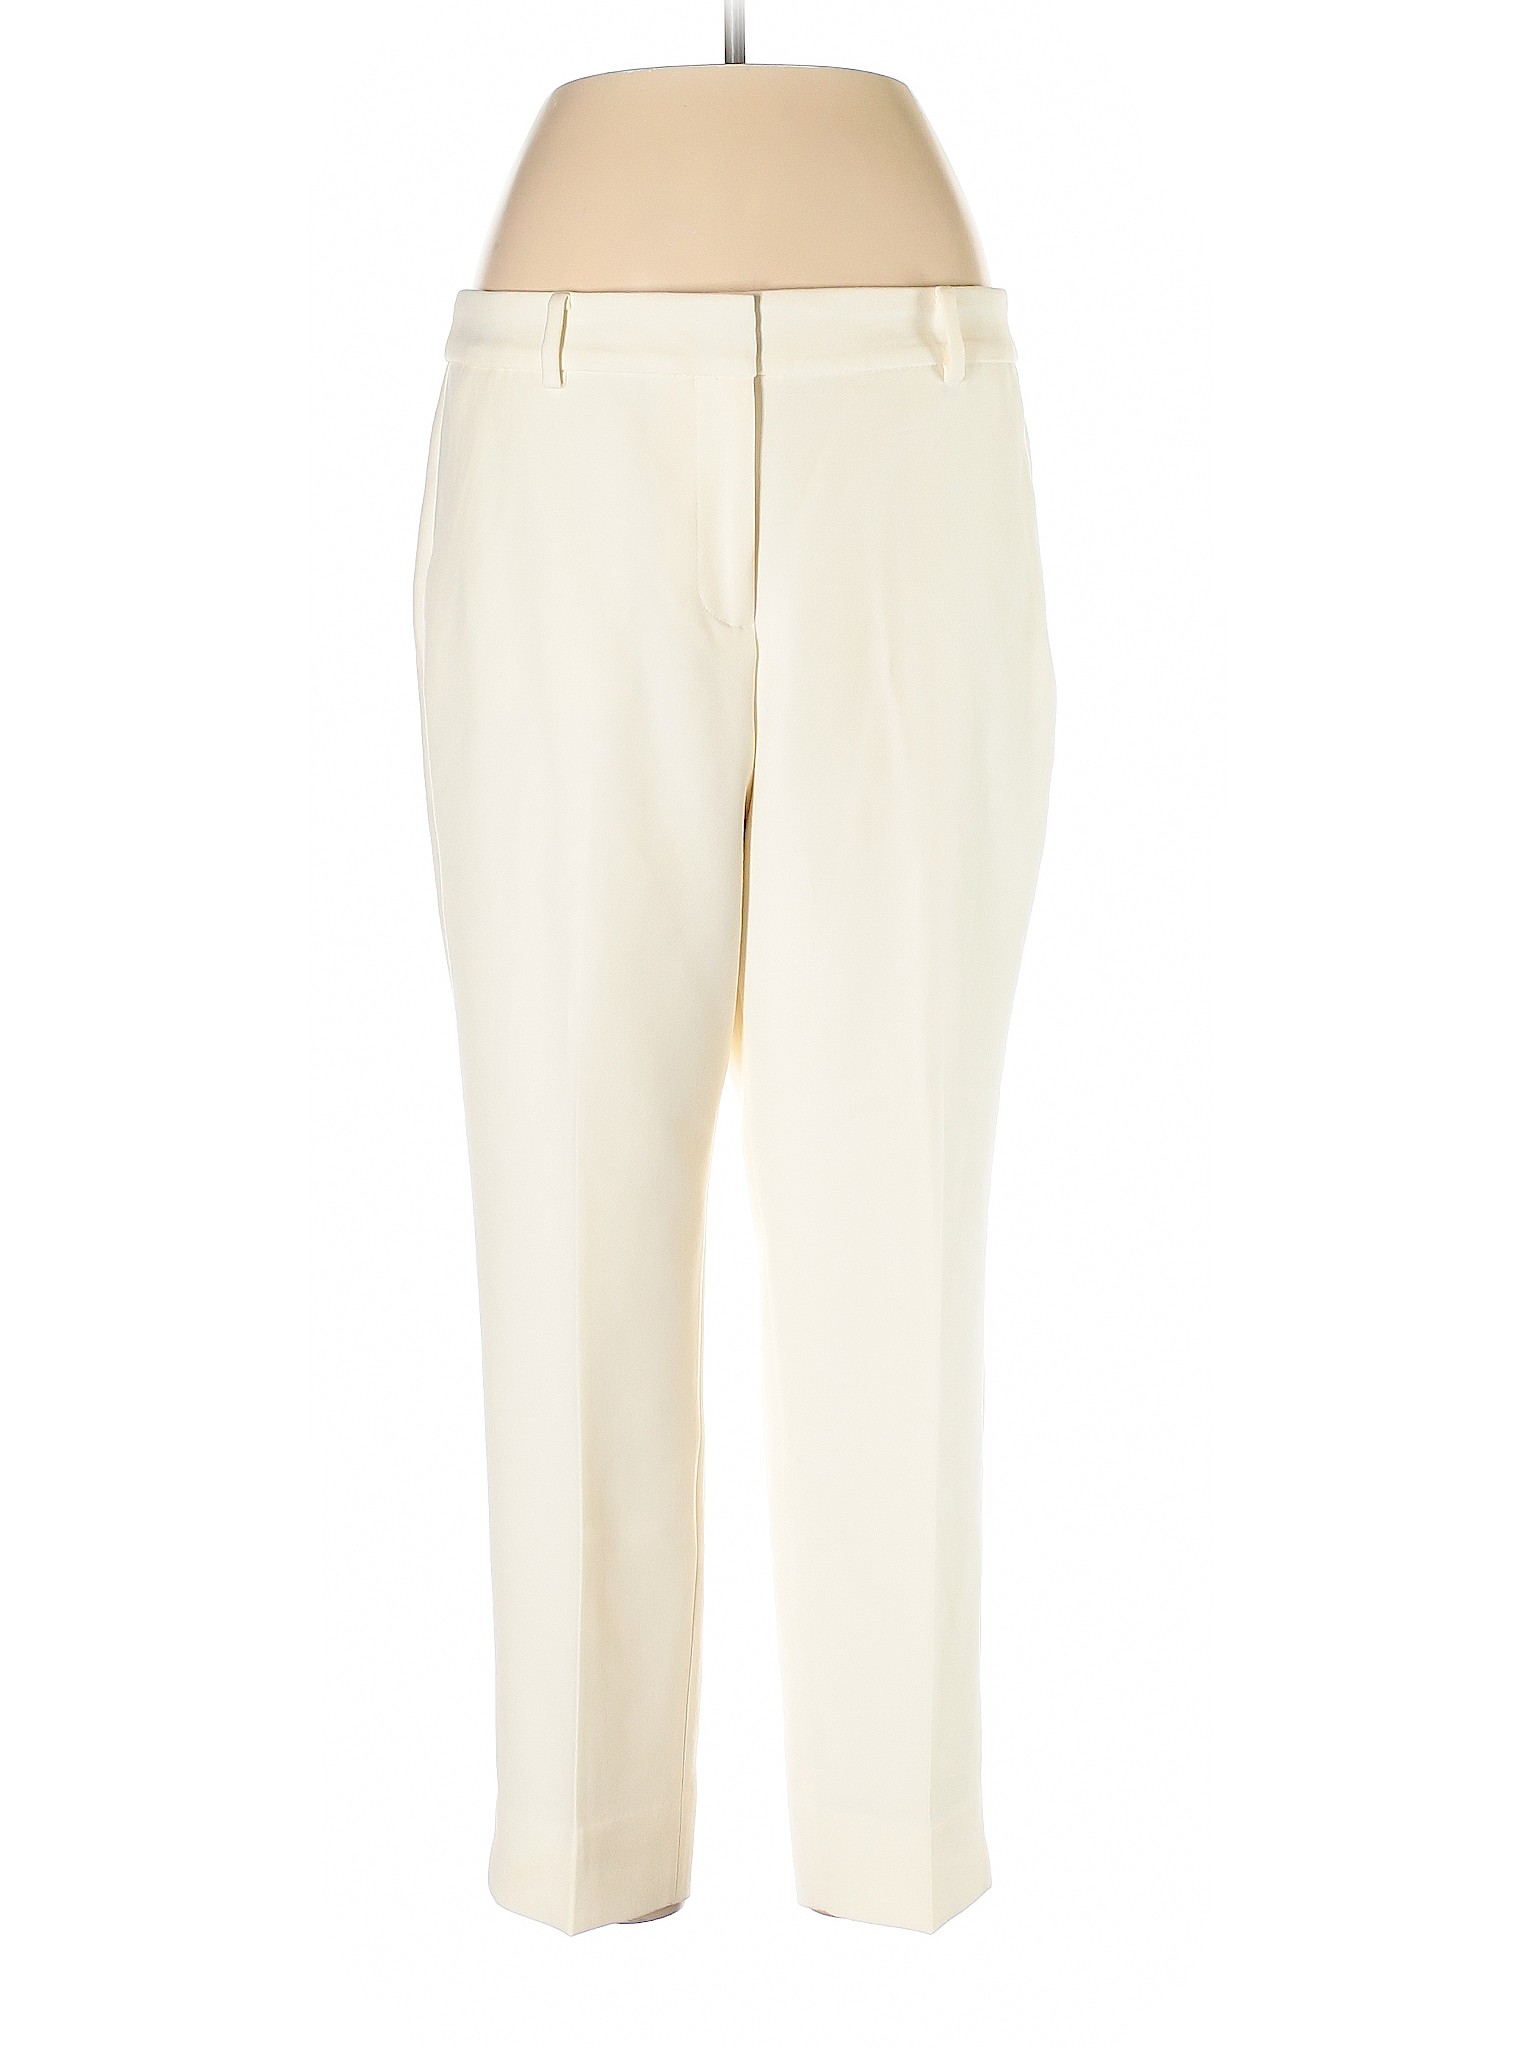 Talbots Women Ivory Dress Pants 12 Petites | eBay